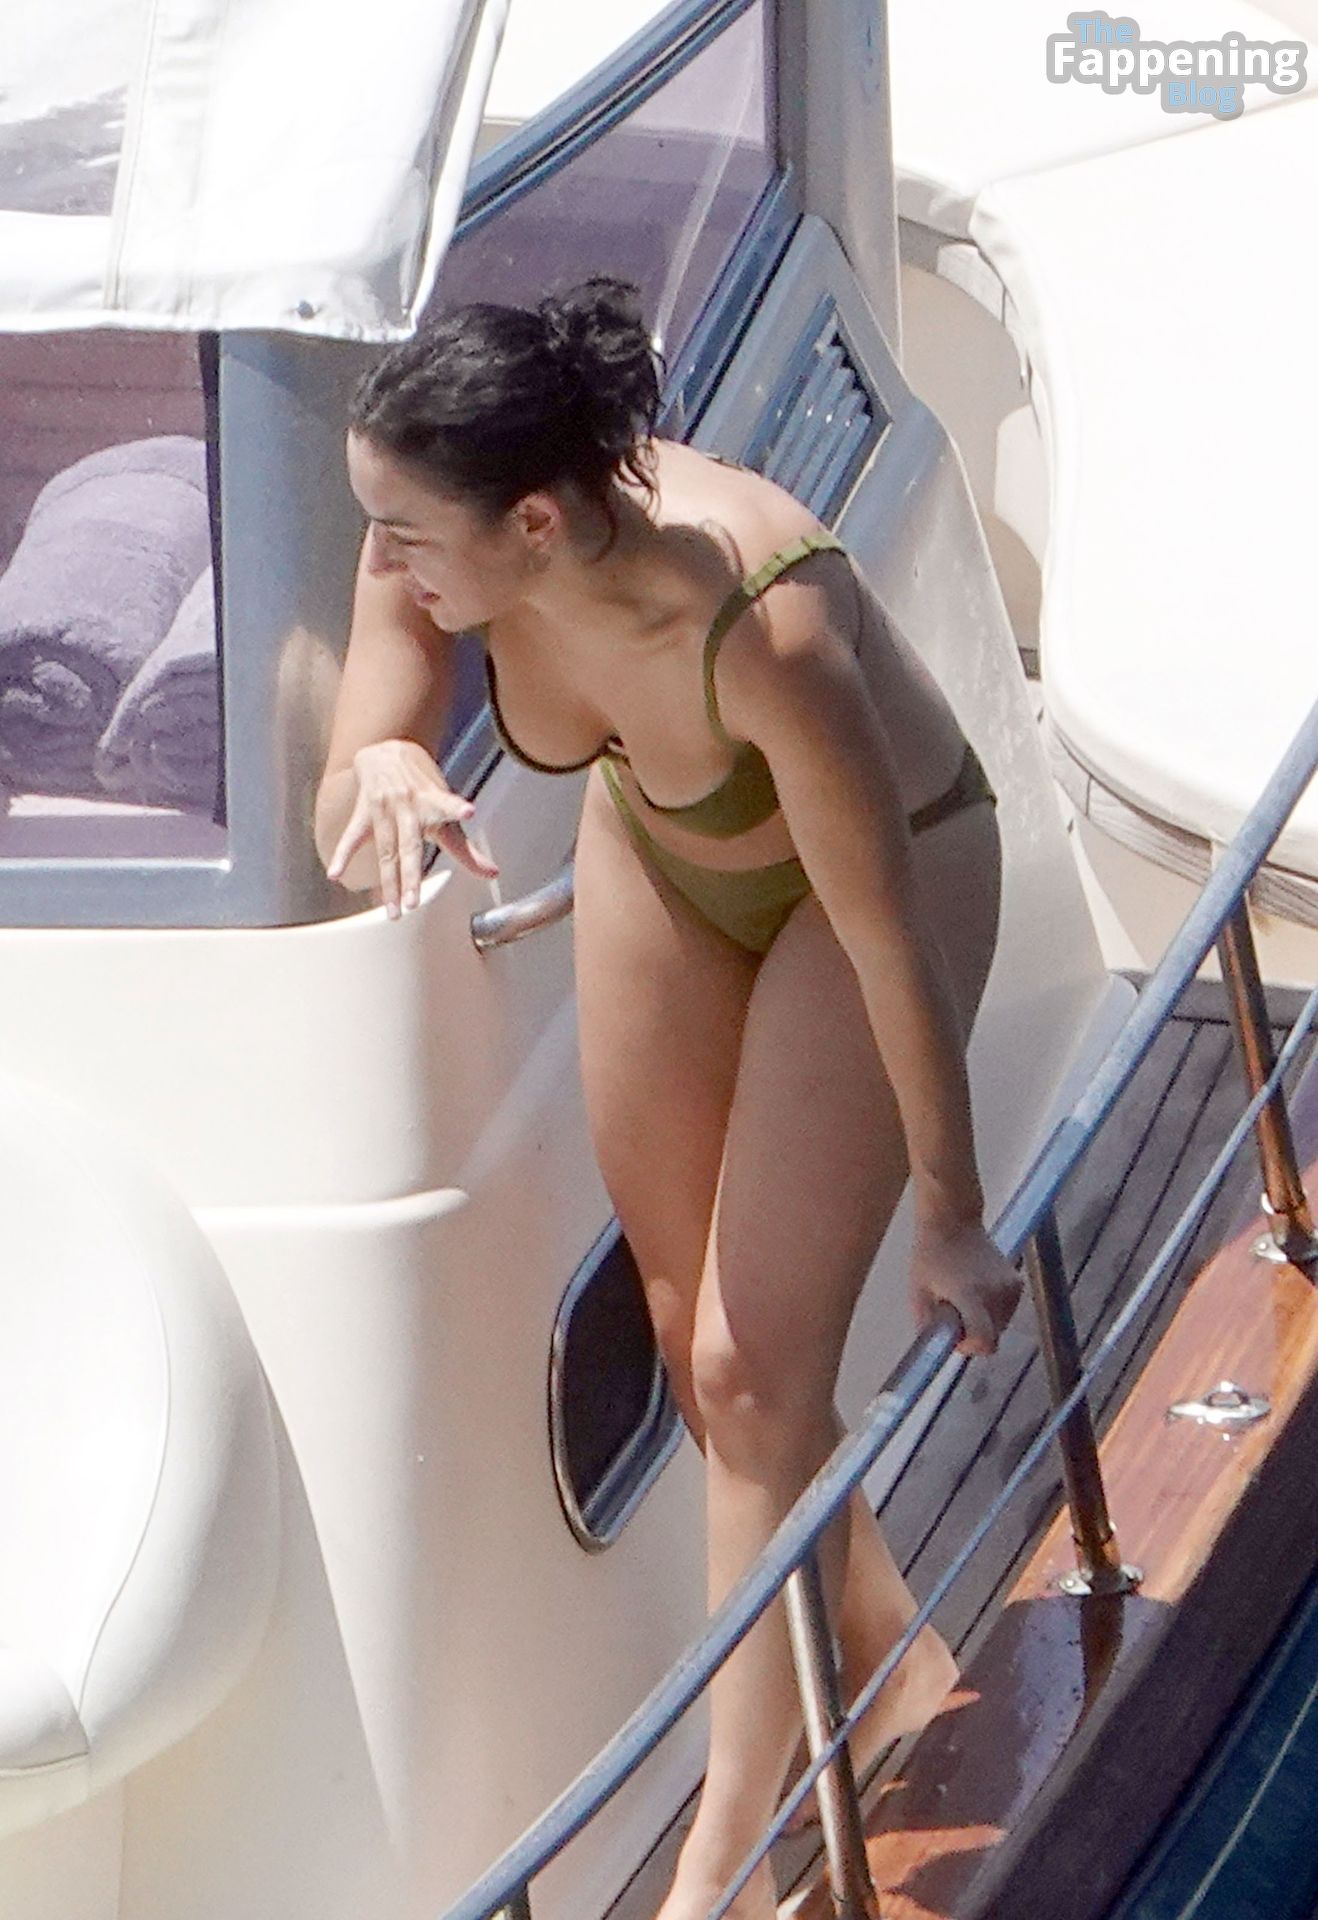 Charli XCX Shows Off Her Voluptuous Figure Wearing Her Skimpy Little Green Bikini (92 Photos)